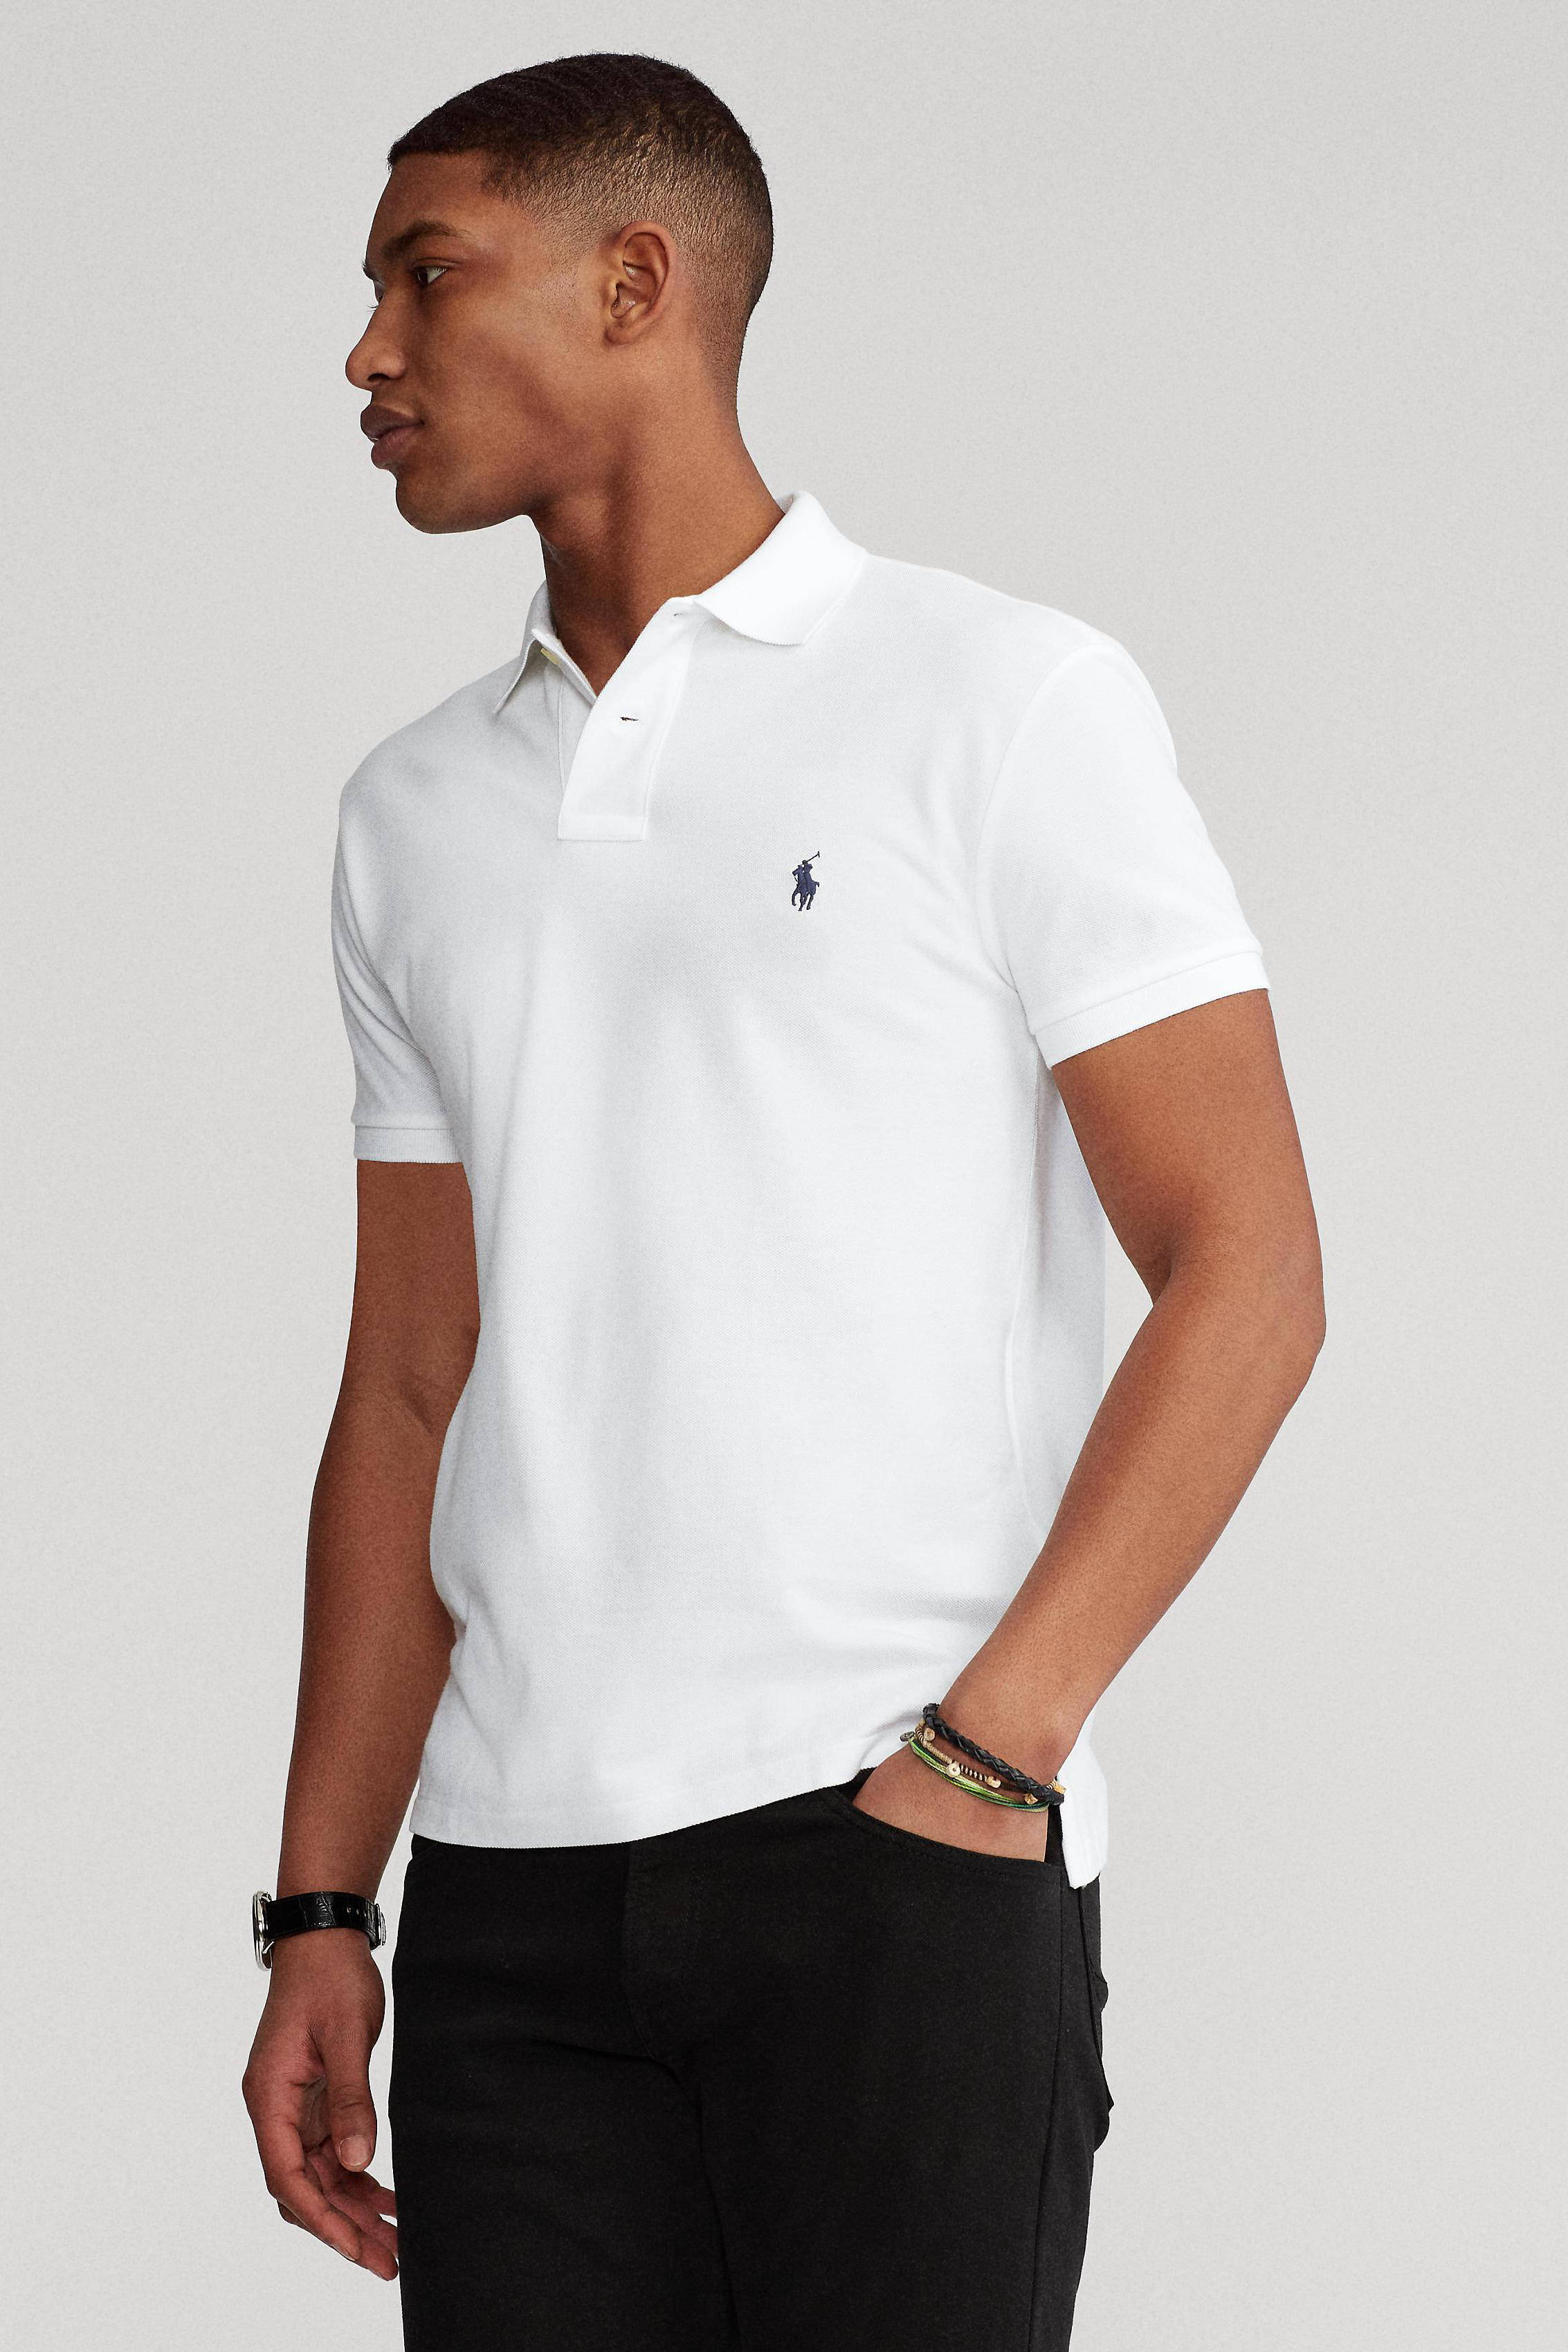 Ralph Lauren Polo shirt wit-blauw volledige print casual uitstraling Mode Shirts Polo shirts 